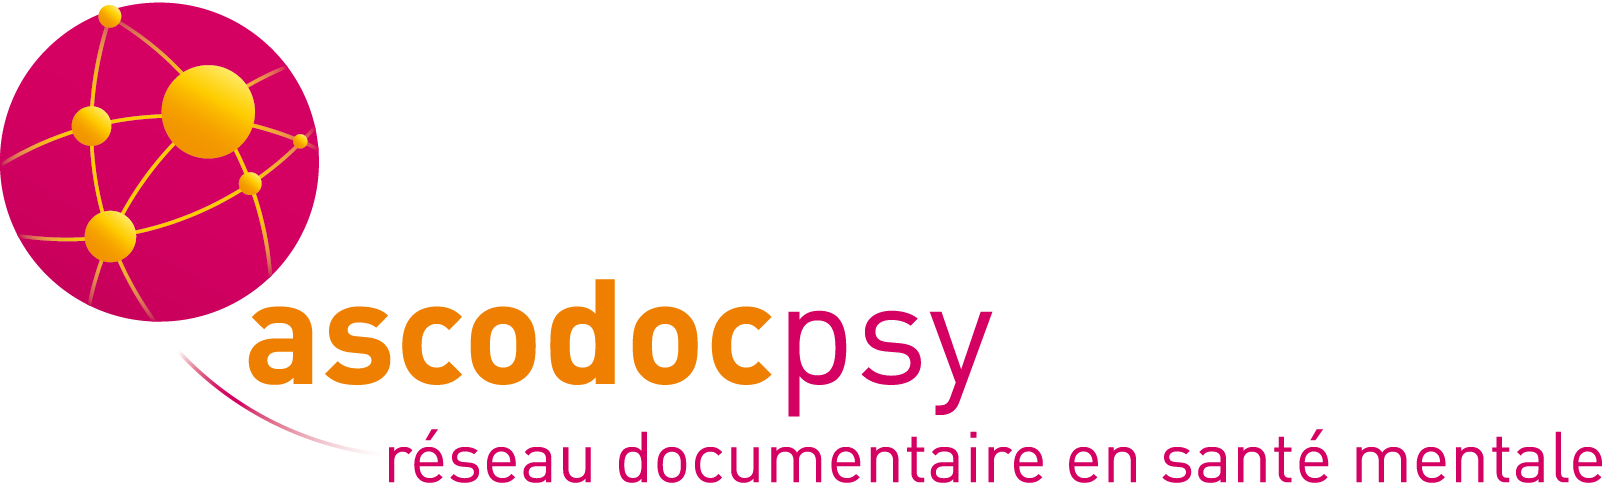 logo de : ASCODOCPSY